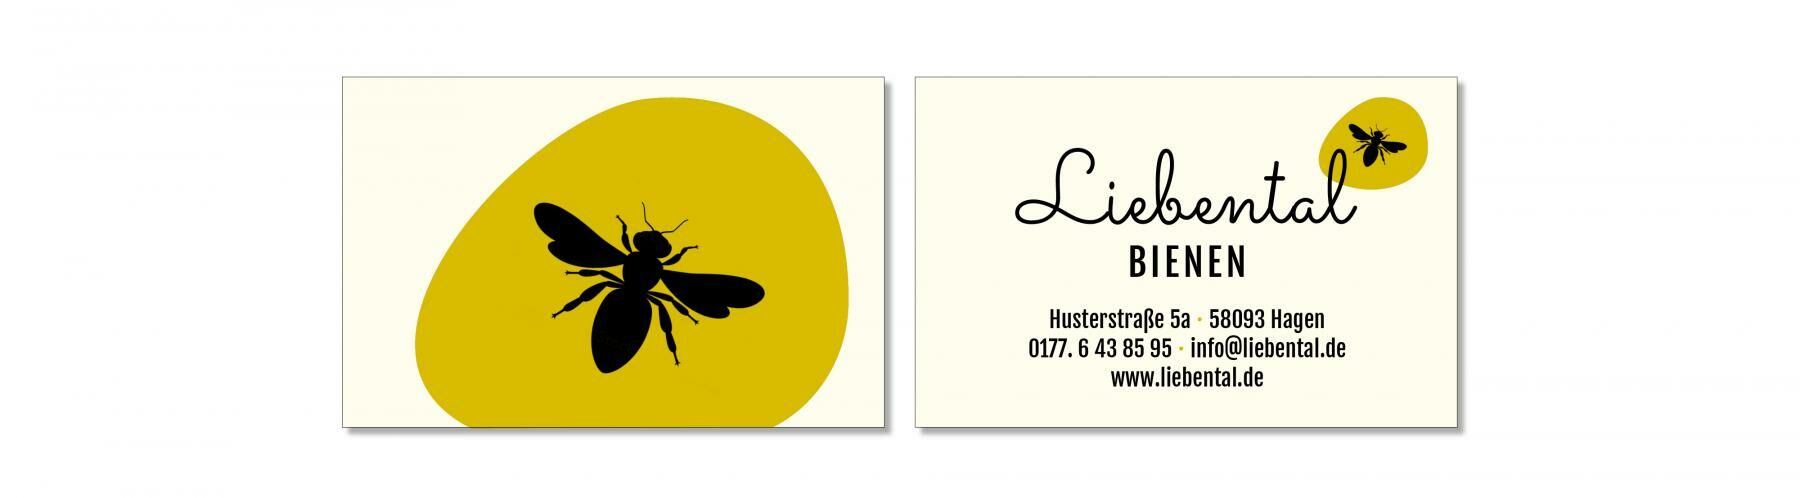 Liebental Bienen, Visitenkarte, Corporate Design